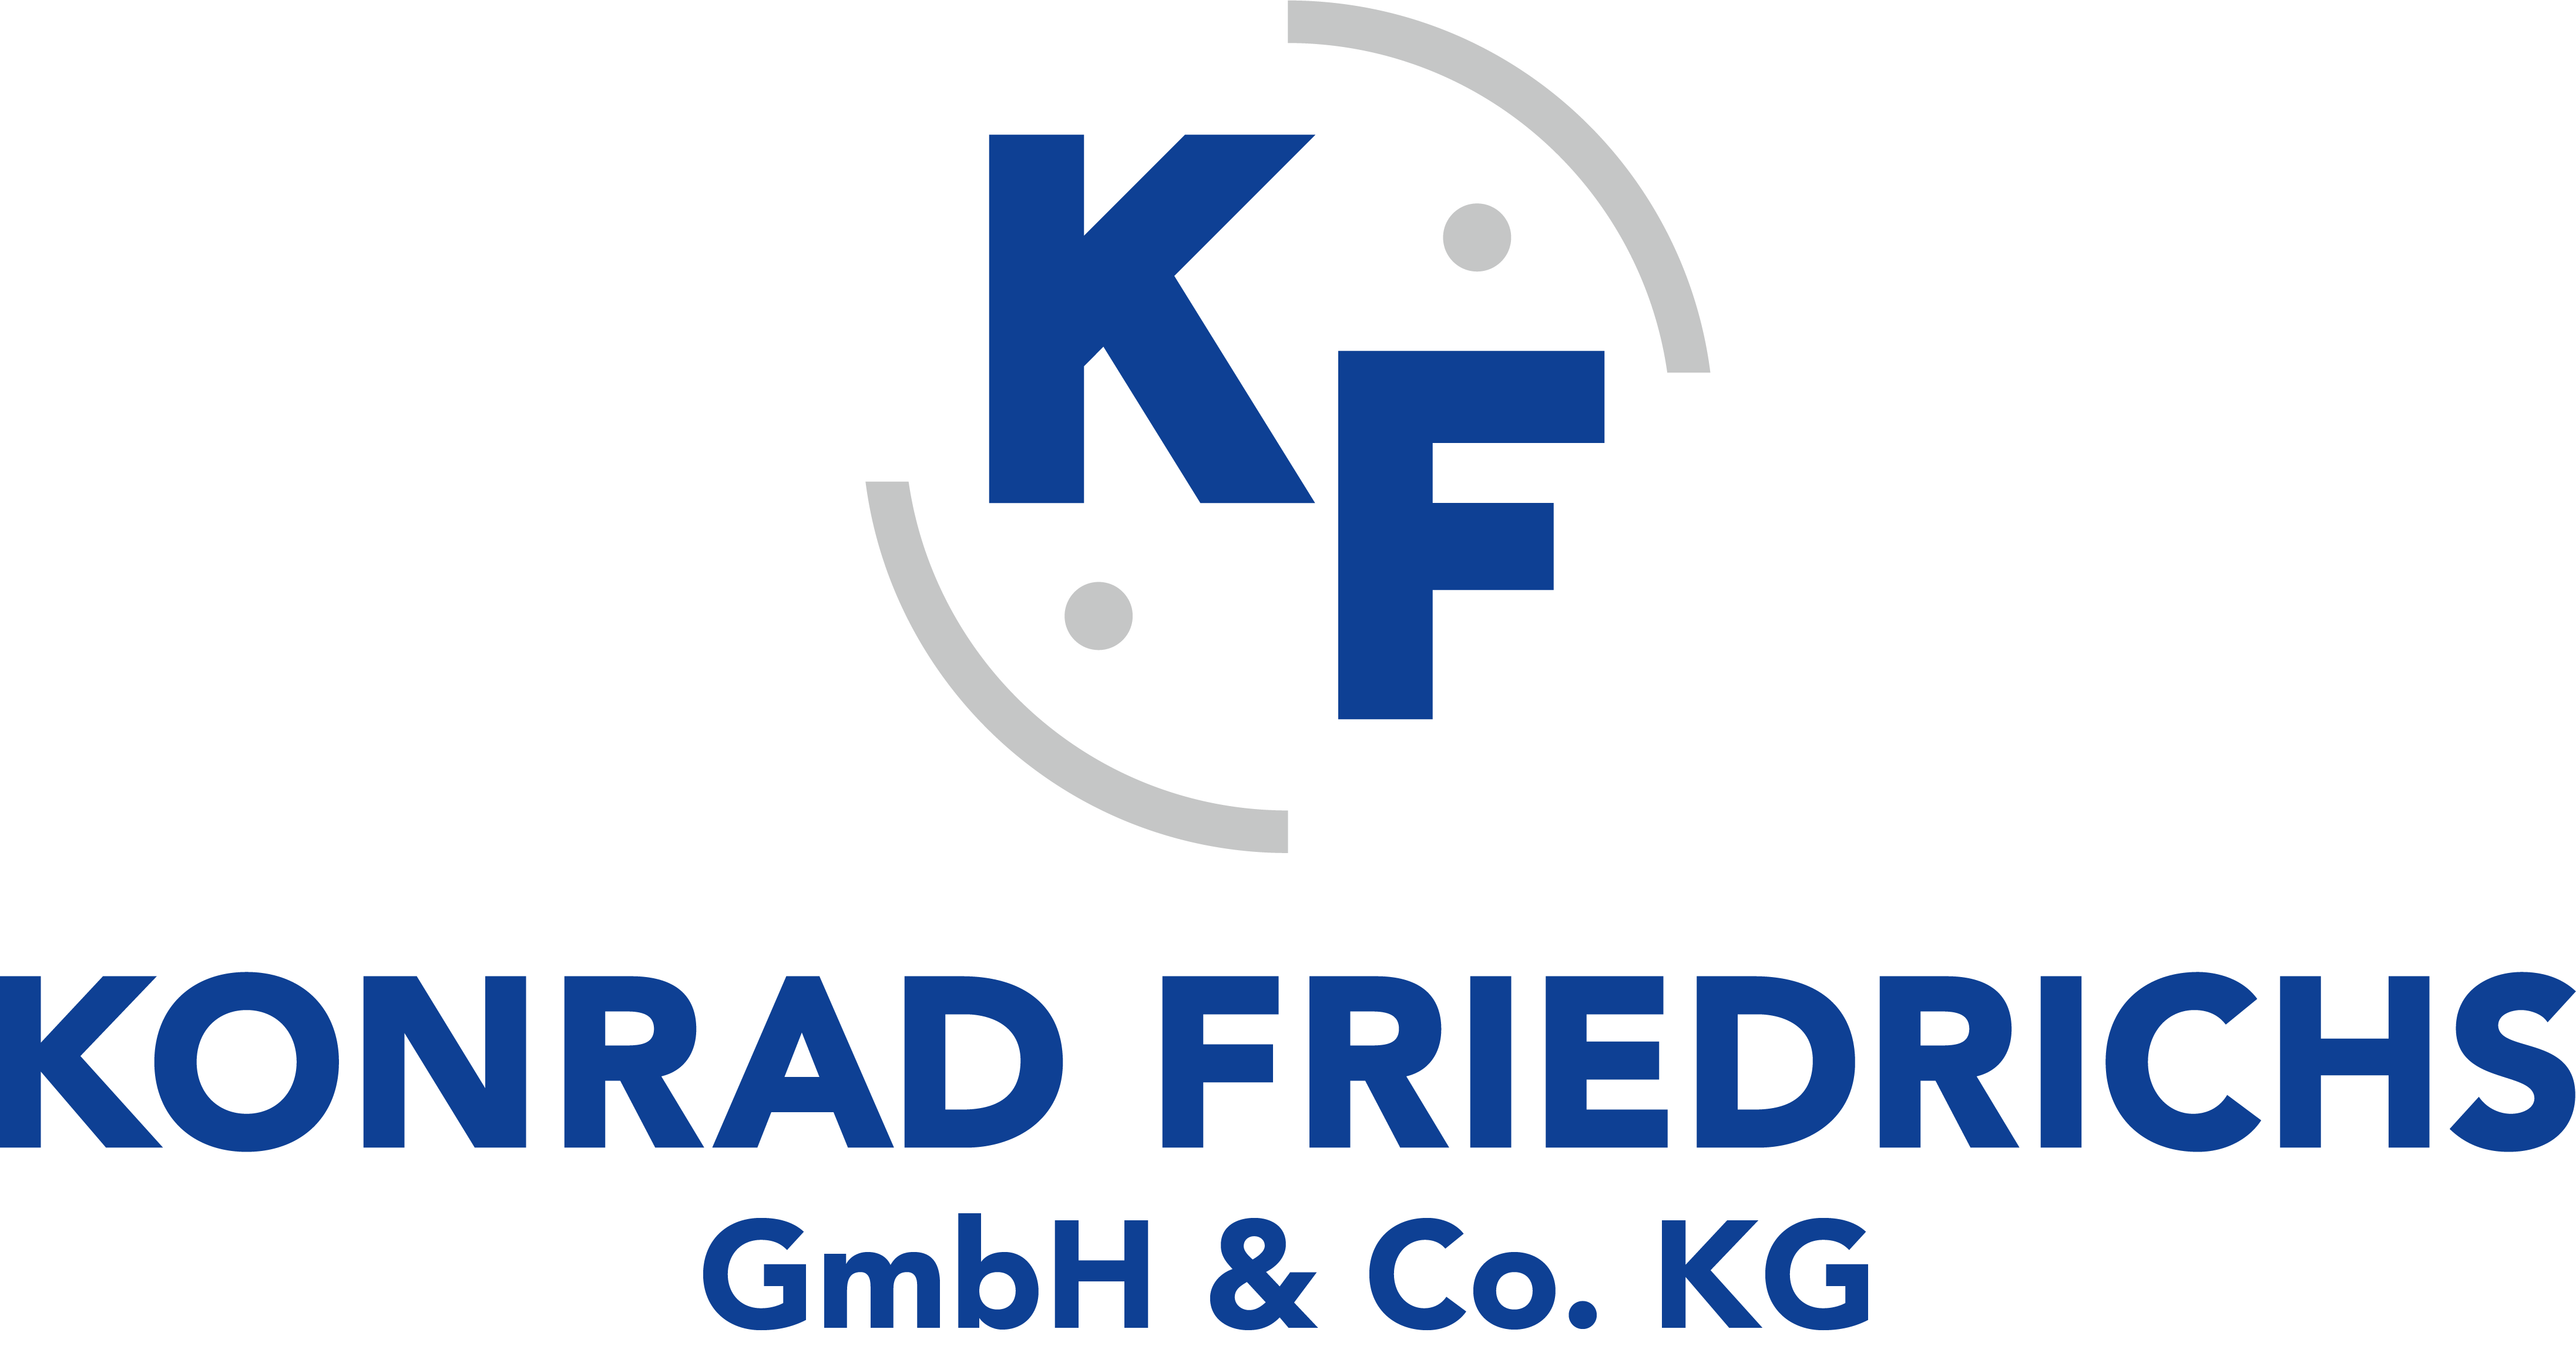 Konrad Friedrichs GmbH & Co. KG